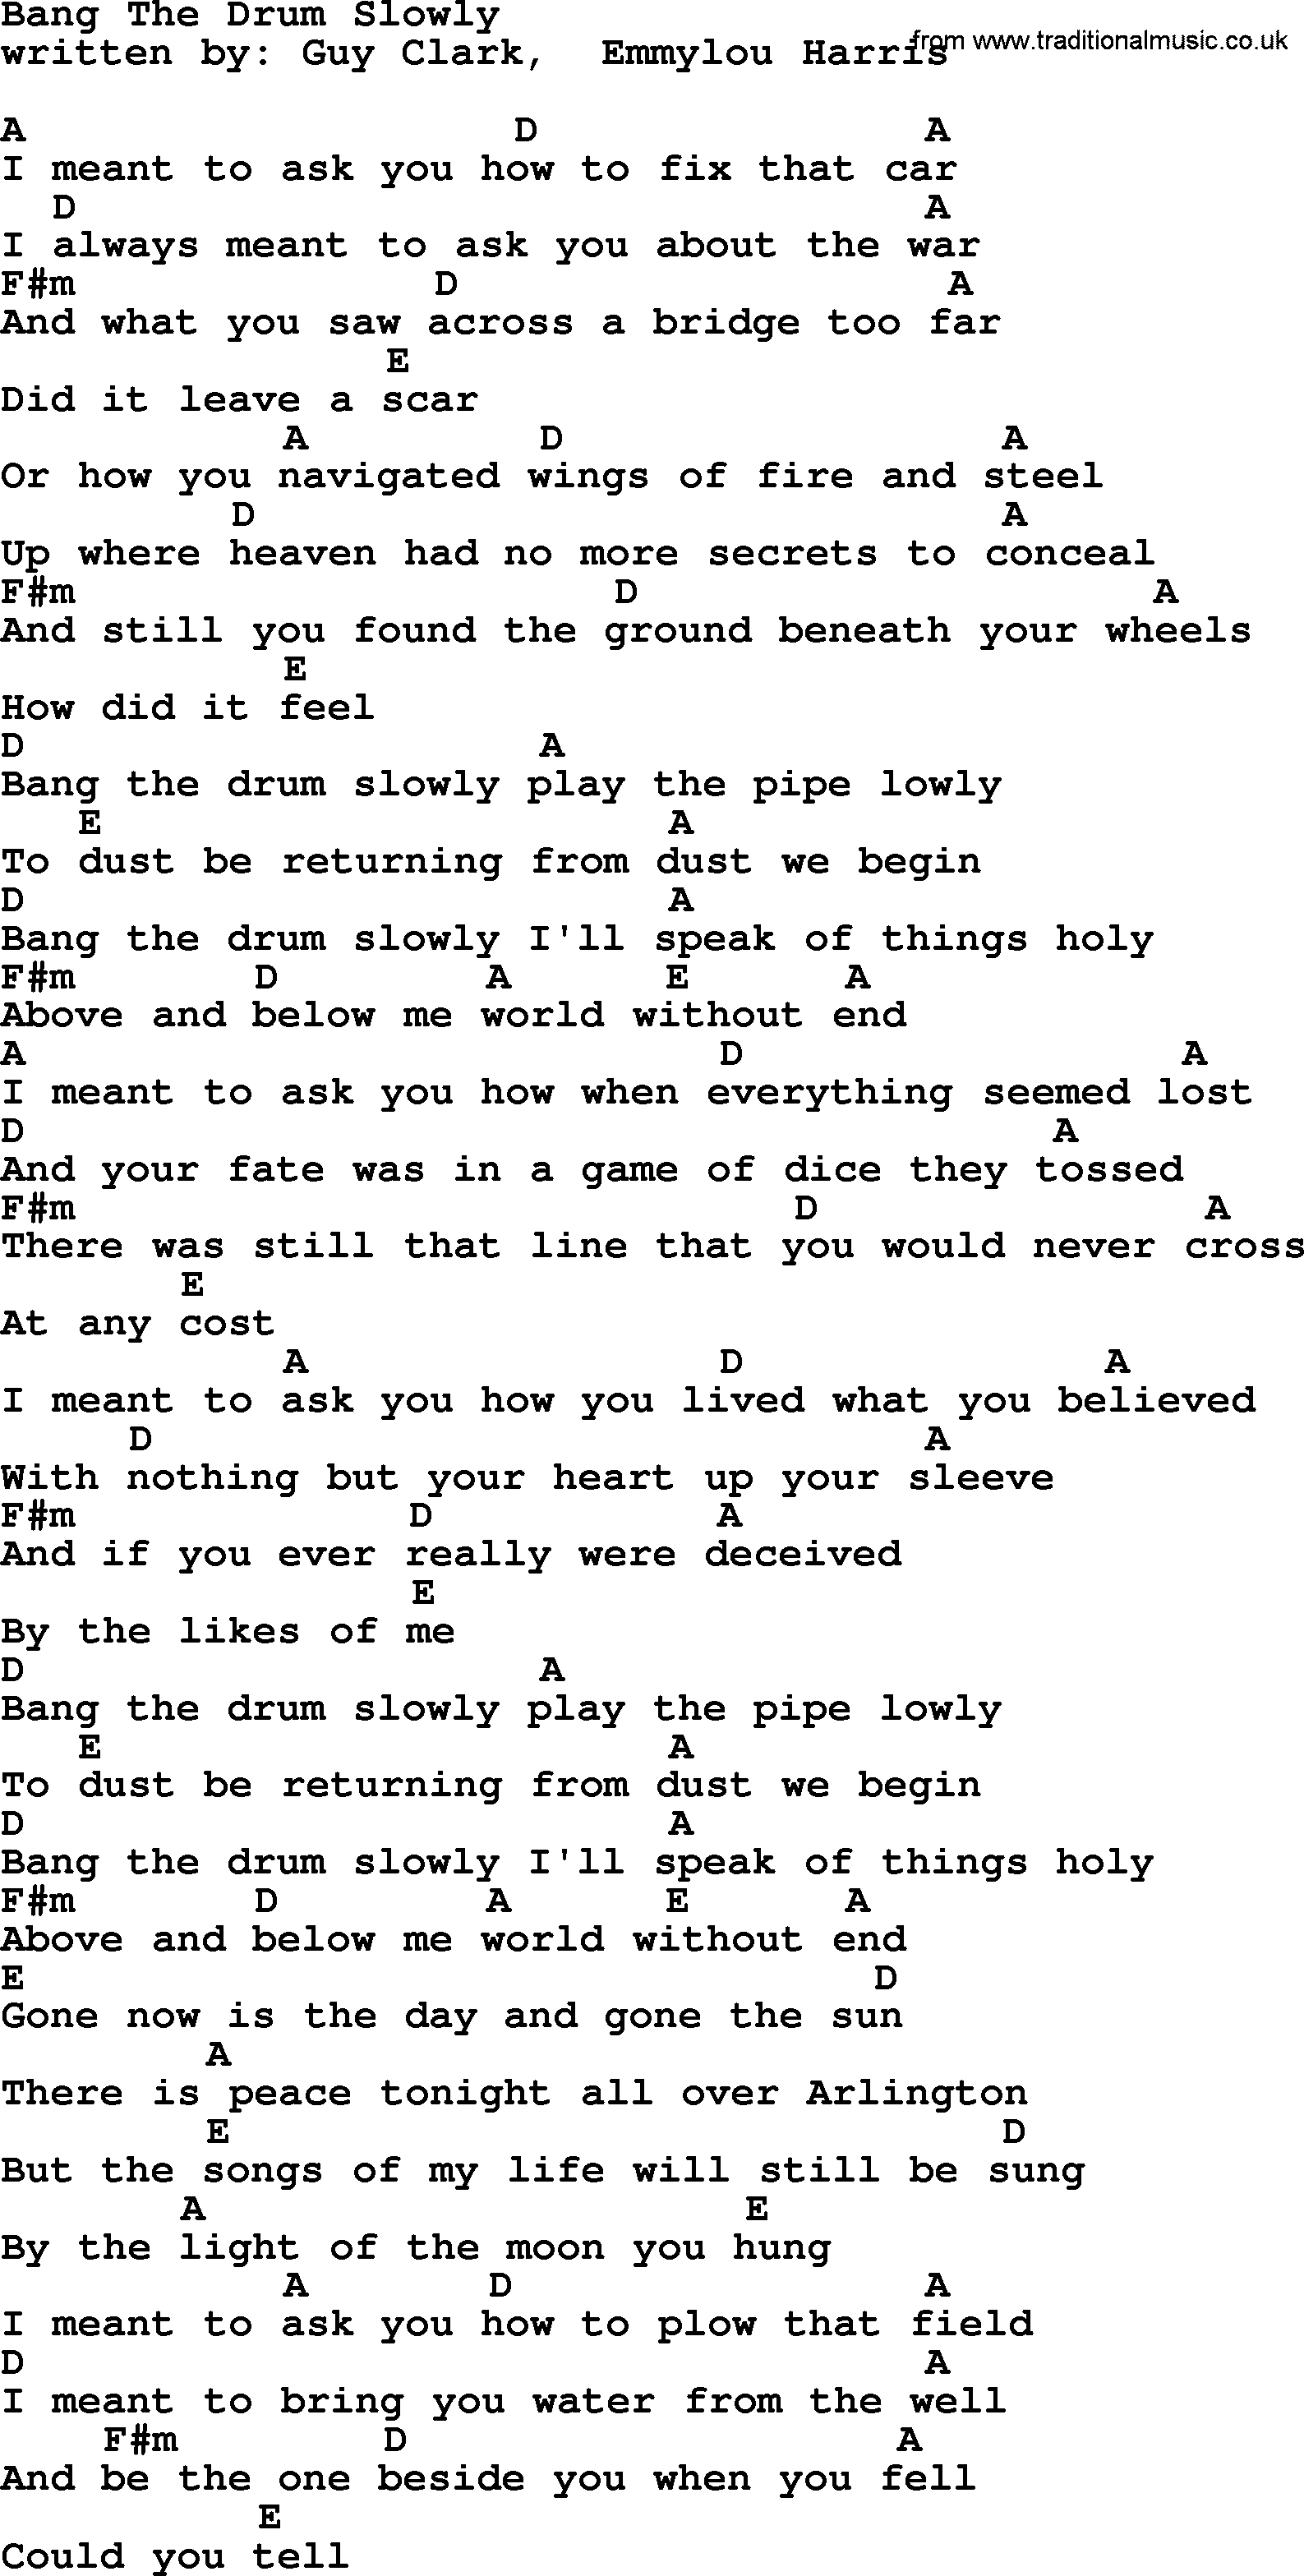 Emmylou Harris song: Bang The Drum Slowly lyrics and chords